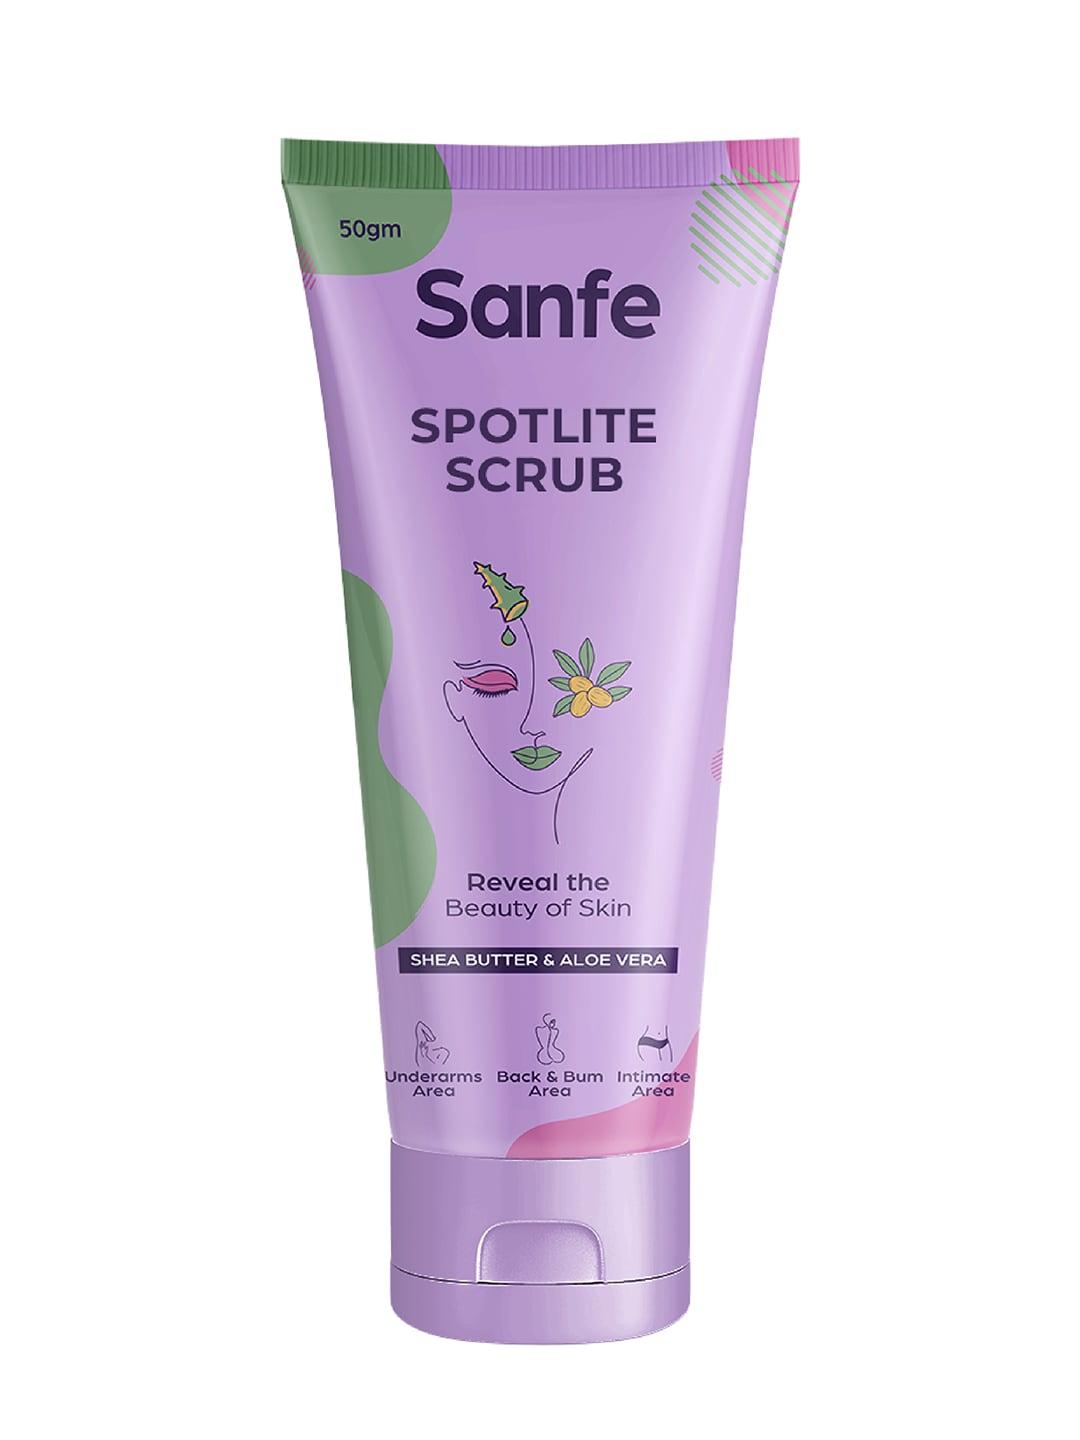 Sanfe Spotlite Sensitive Body Scrub For Dark Underarms - 50g